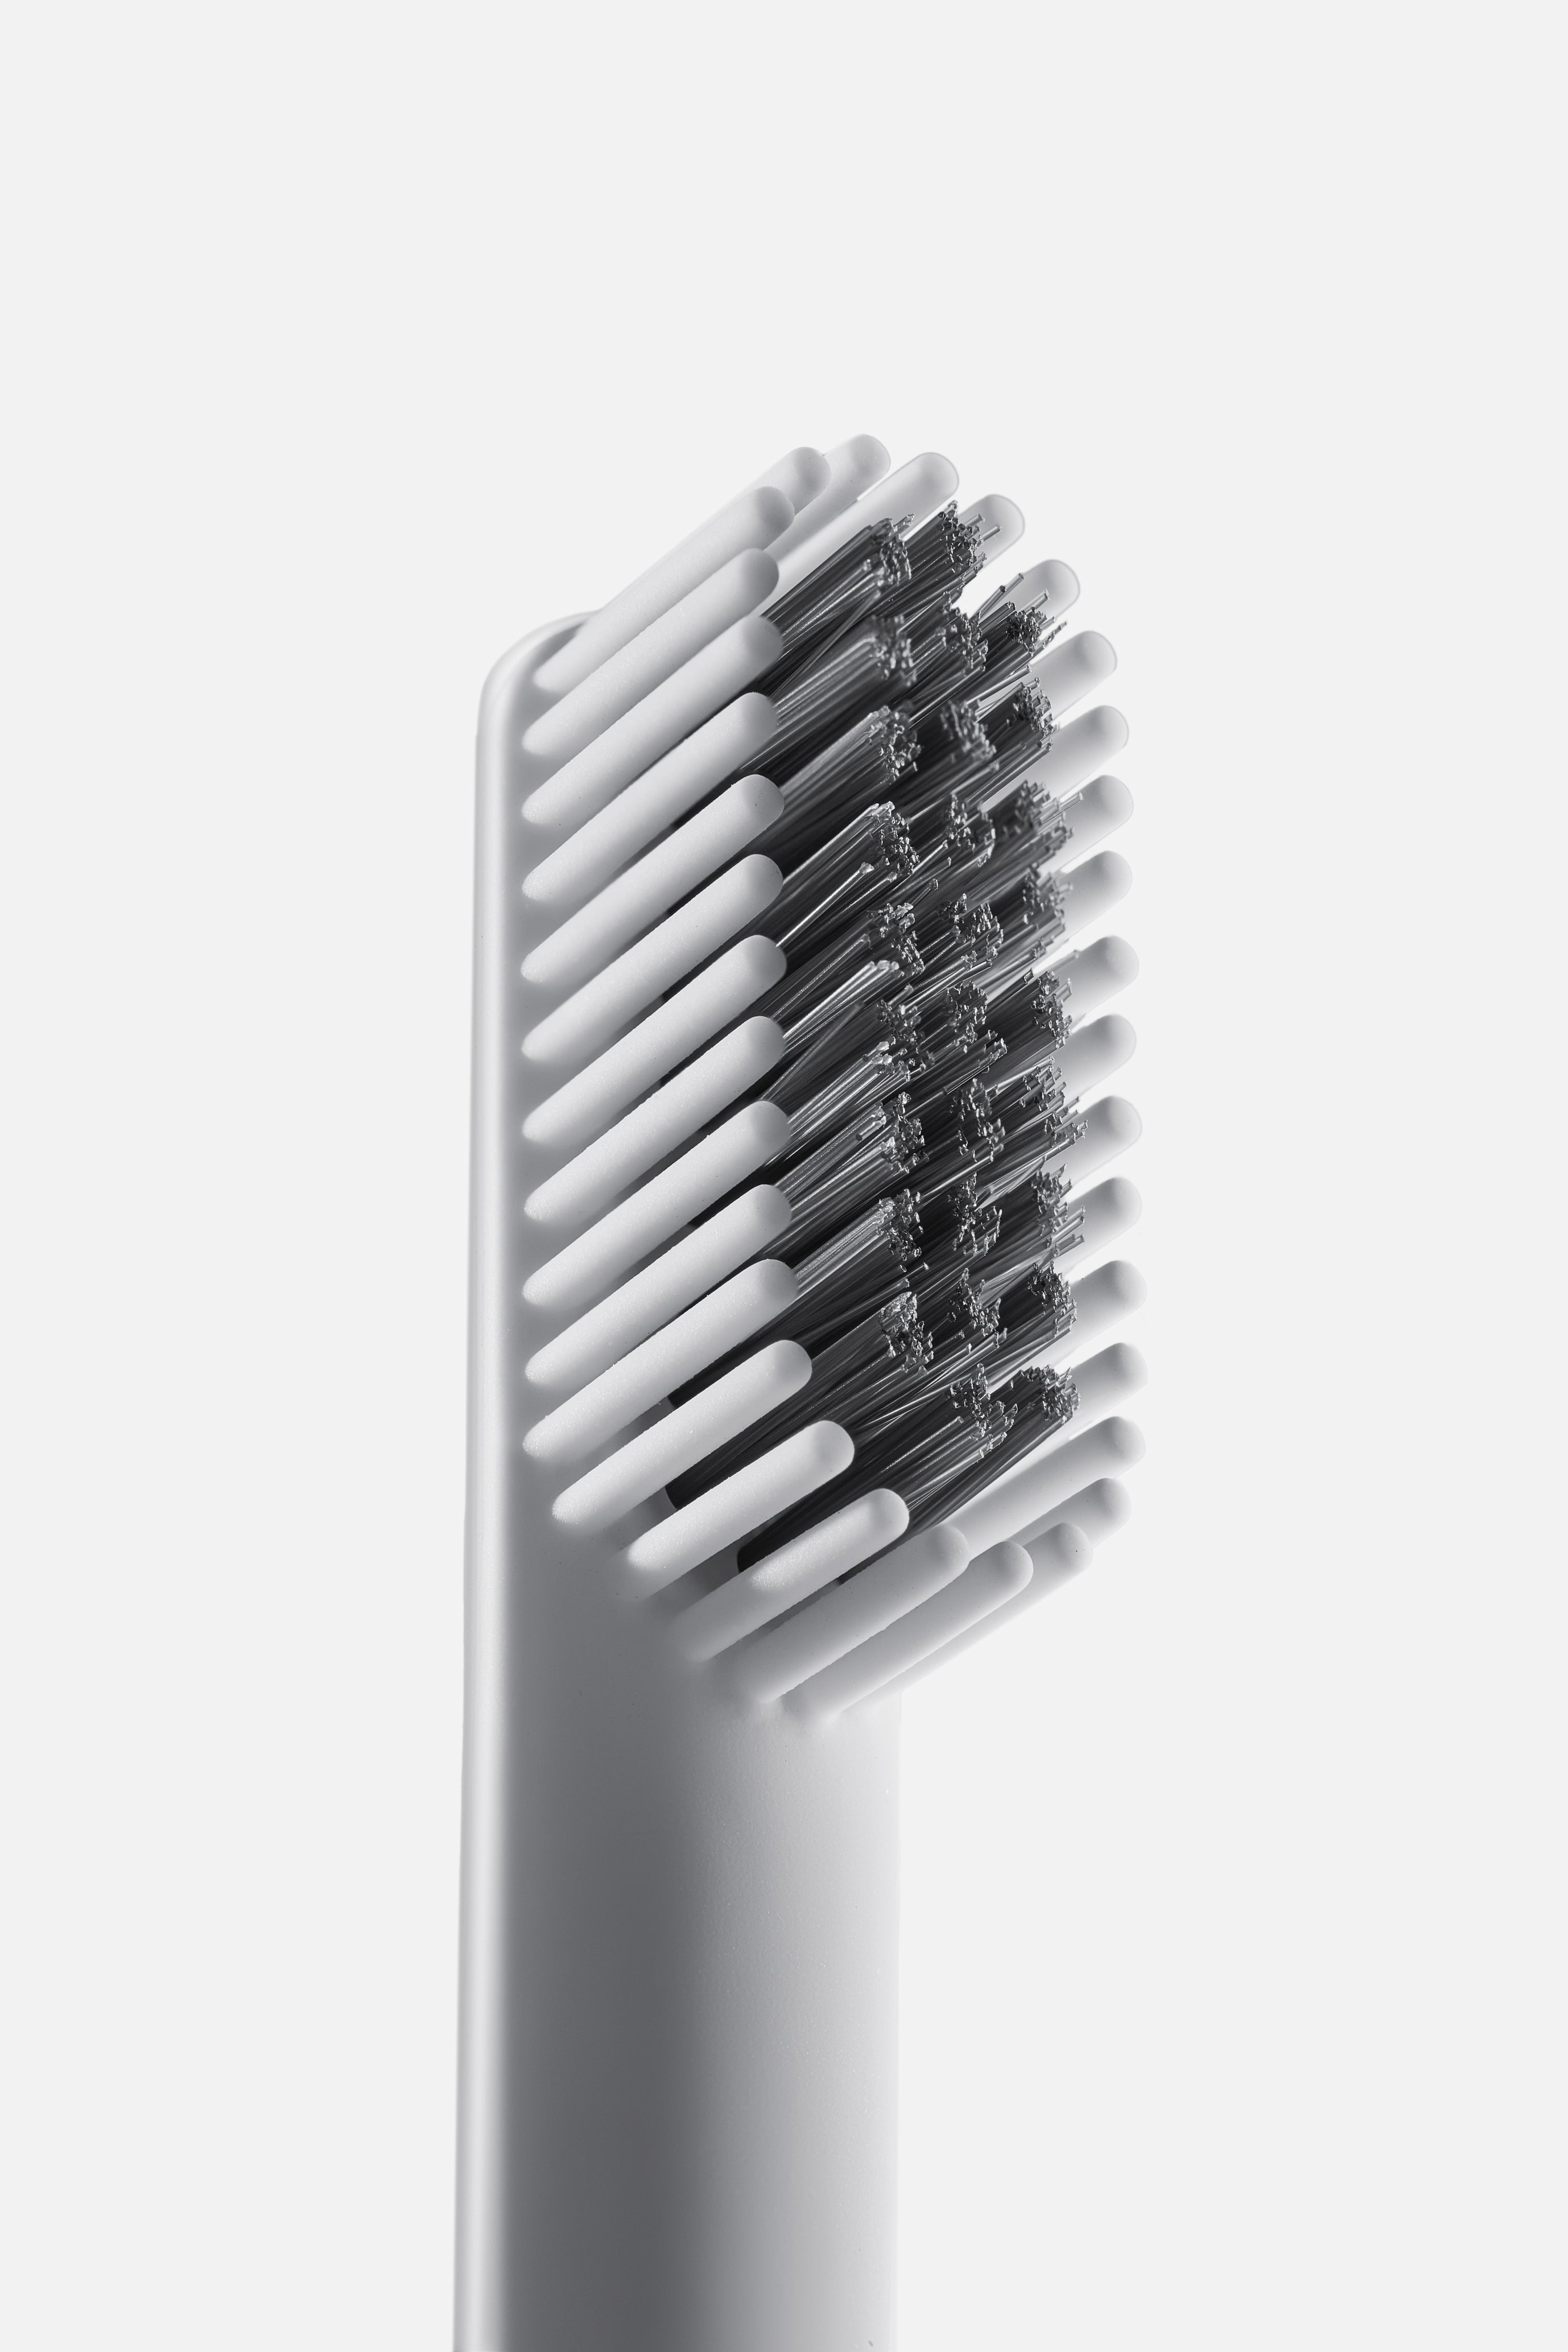 Pomabrush - Nylon-Silicone Brush Heads - White (Pack of 4)